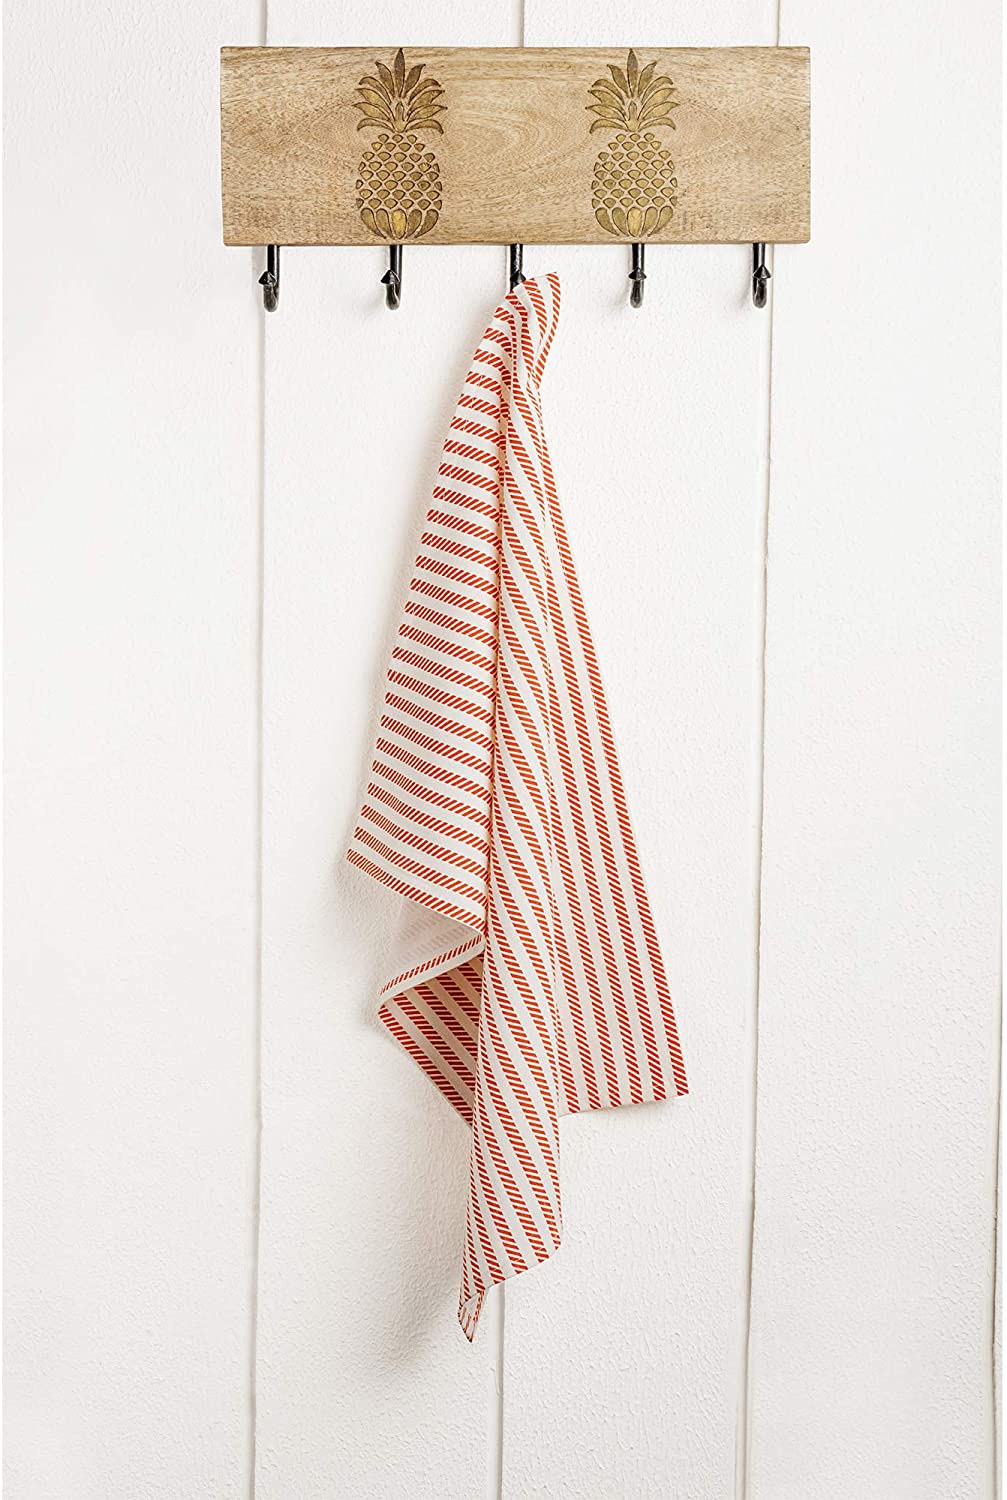 Striped Kitchen Towels, Set of 3